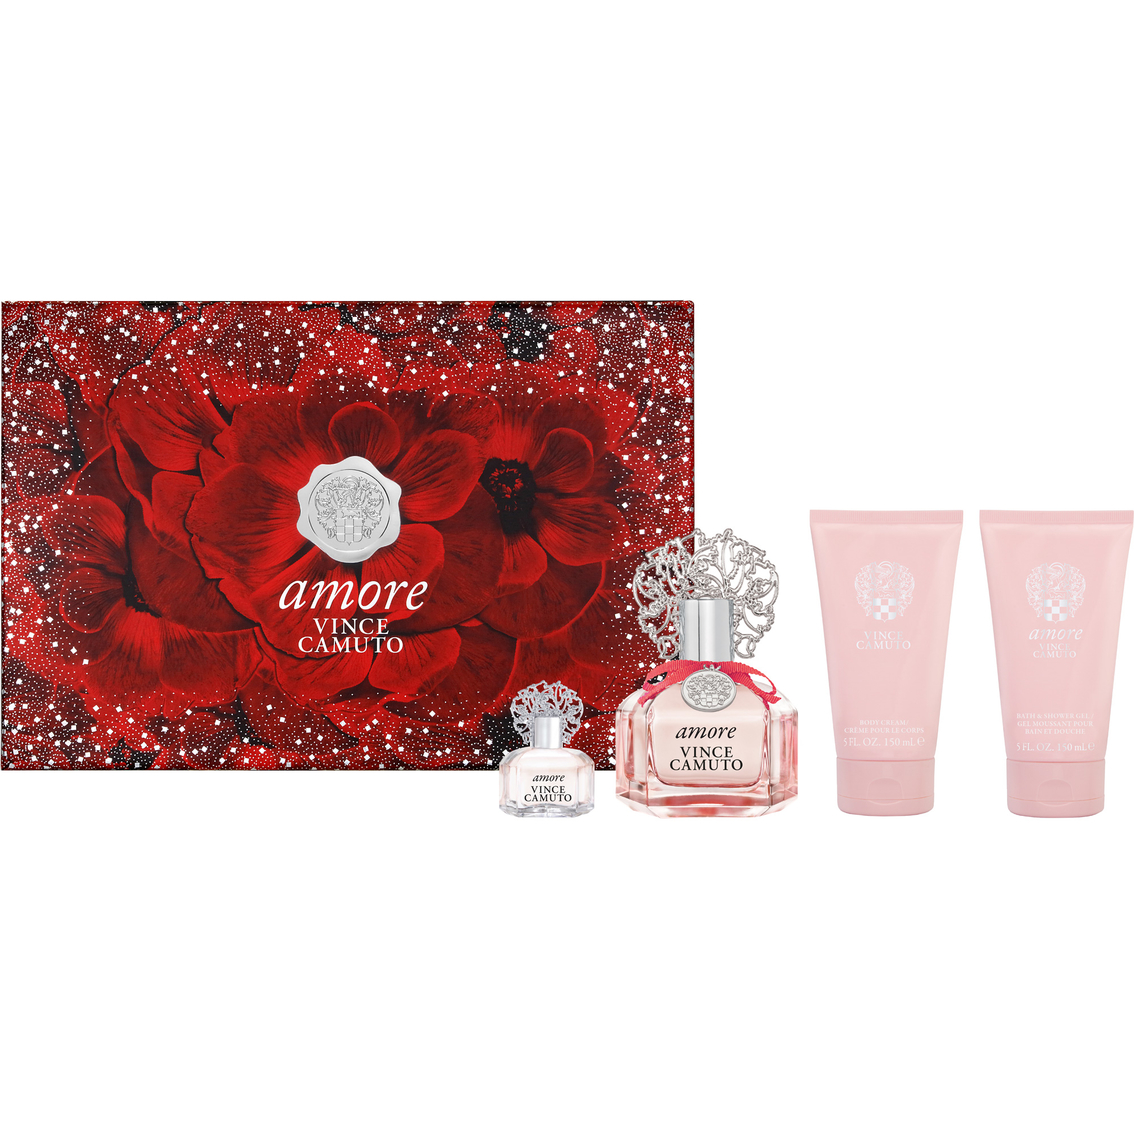 Vince Camuto Amore Gift Set | Gift Sets | Beauty & Health | Shop The ...